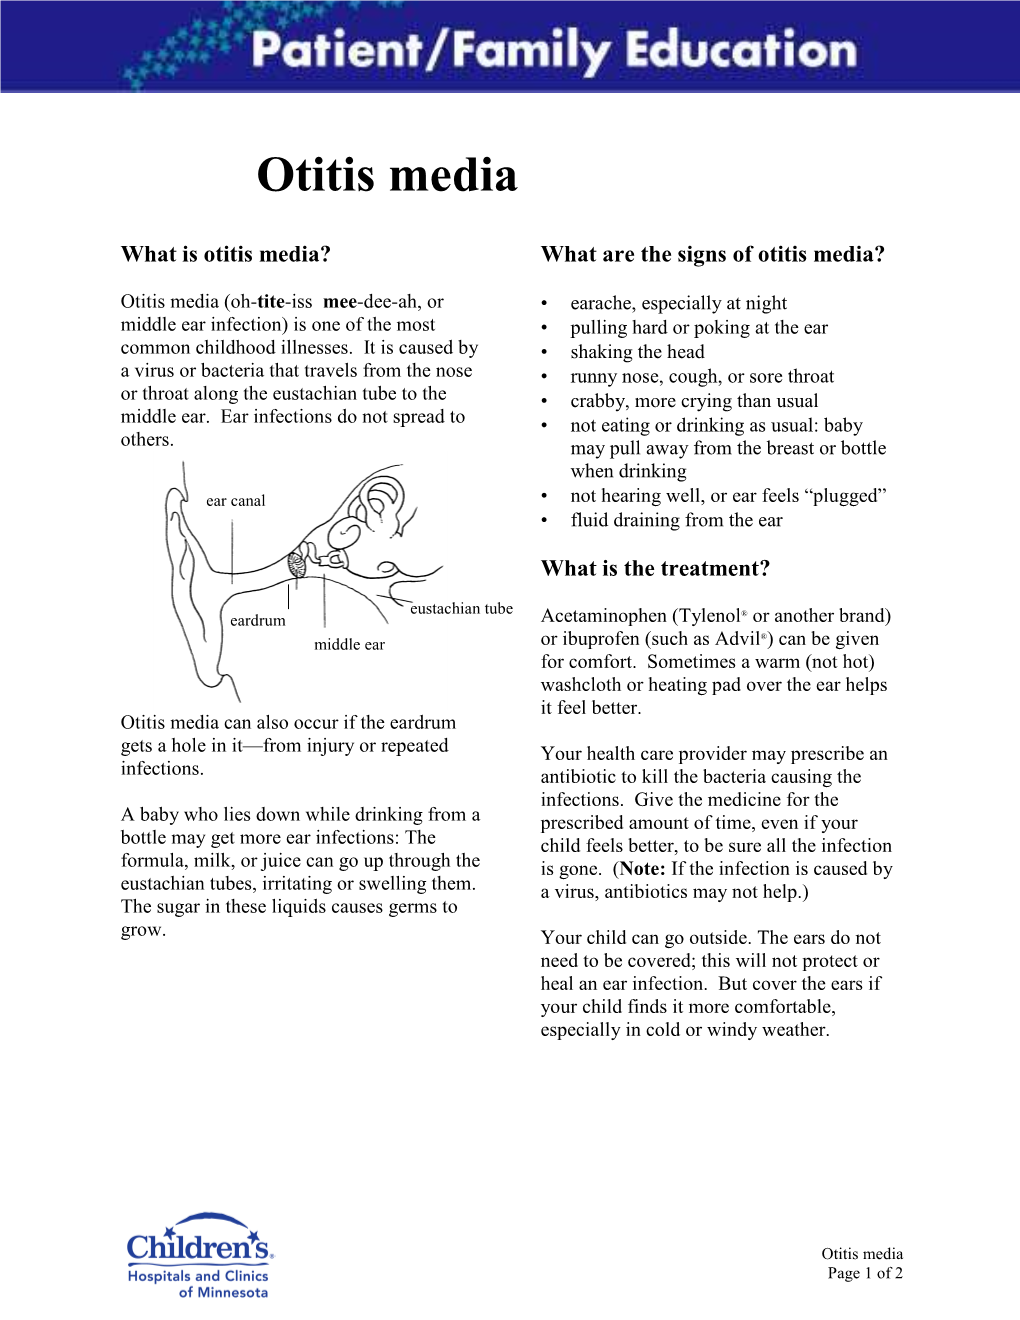 Otitis Media